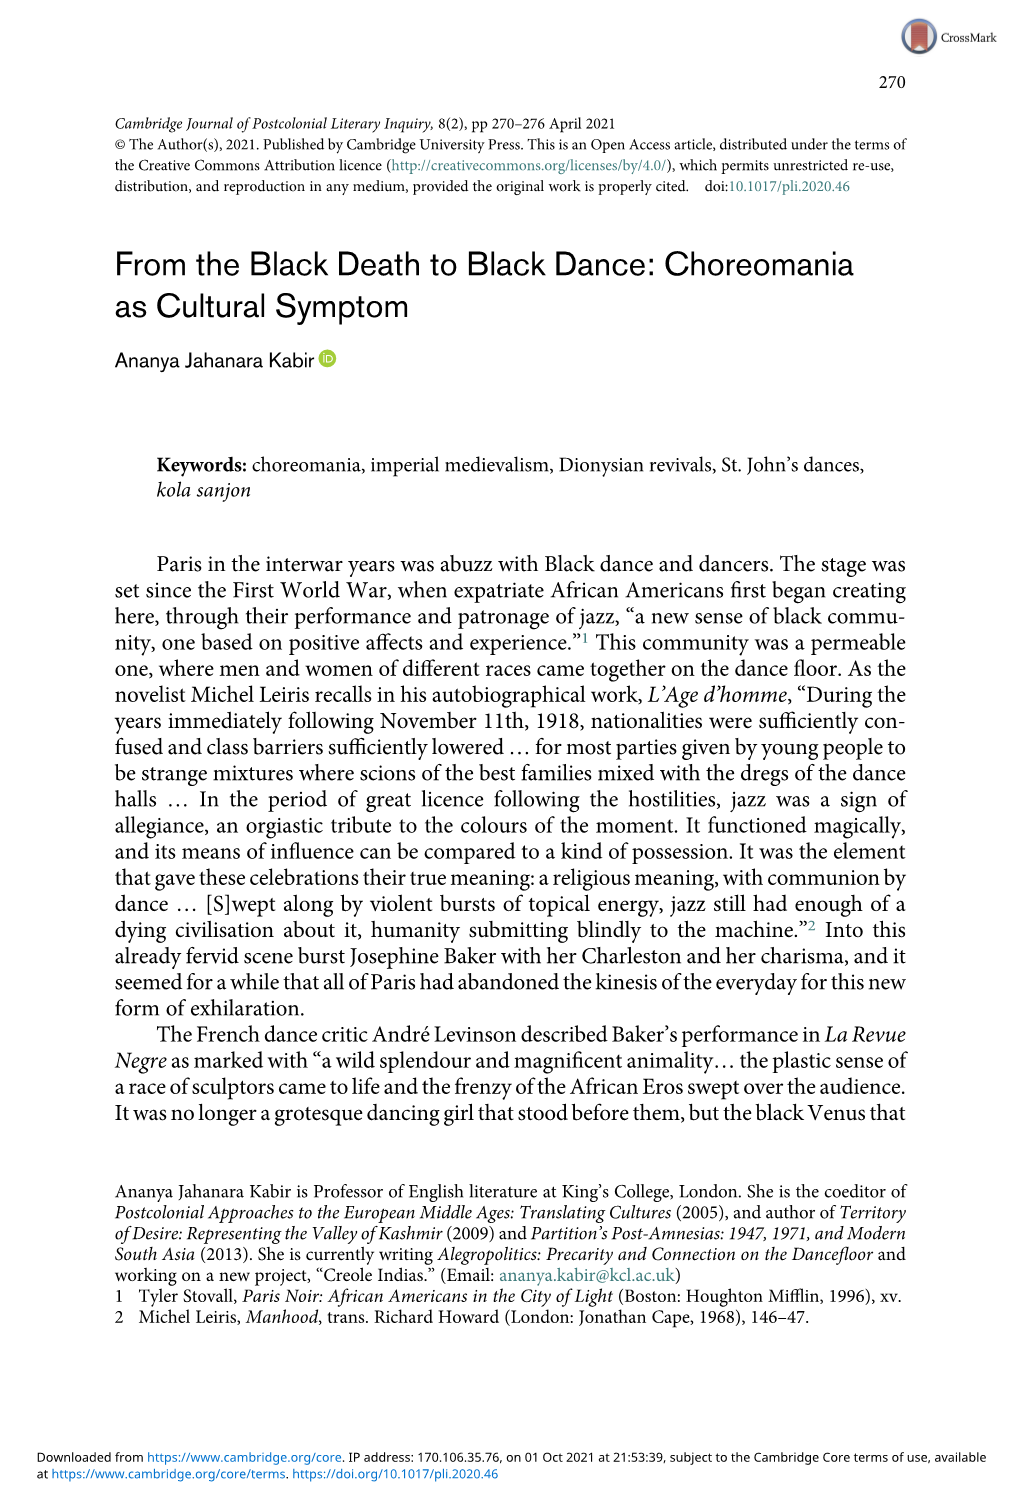 From the Black Death to Black Dance: Choreomania As Cultural Symptom